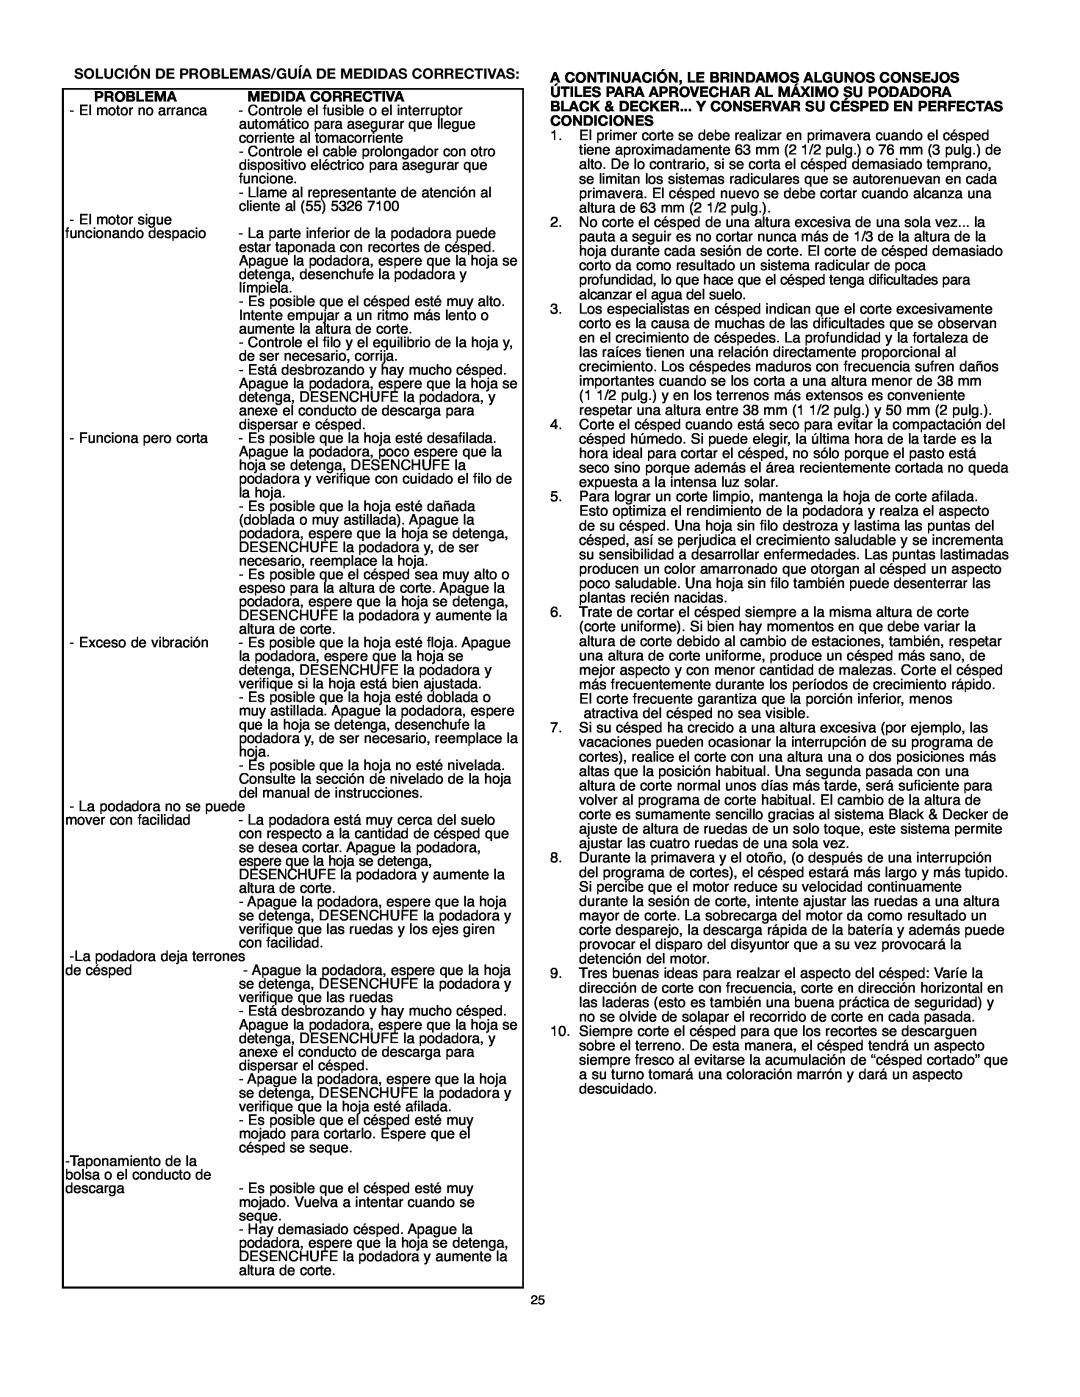 Black & Decker MM875 instruction manual Solución De Problemas/Guía De Medidas Correctivas Medida Correctiva 